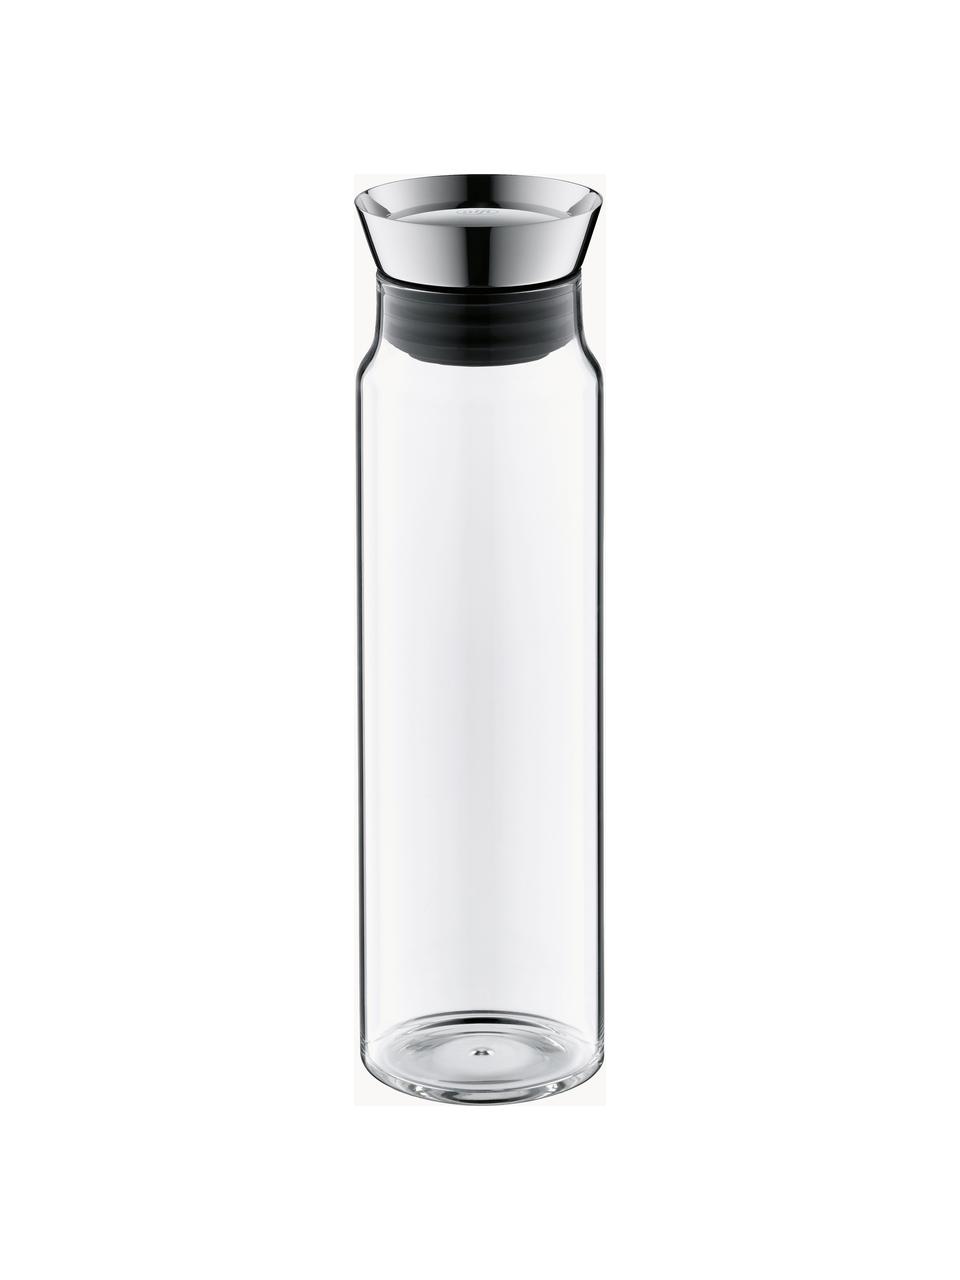 Wasserkaraffe Flomotion mit Deckel, 1 L, Deckel: Kunststoff, Transparent, 1 L